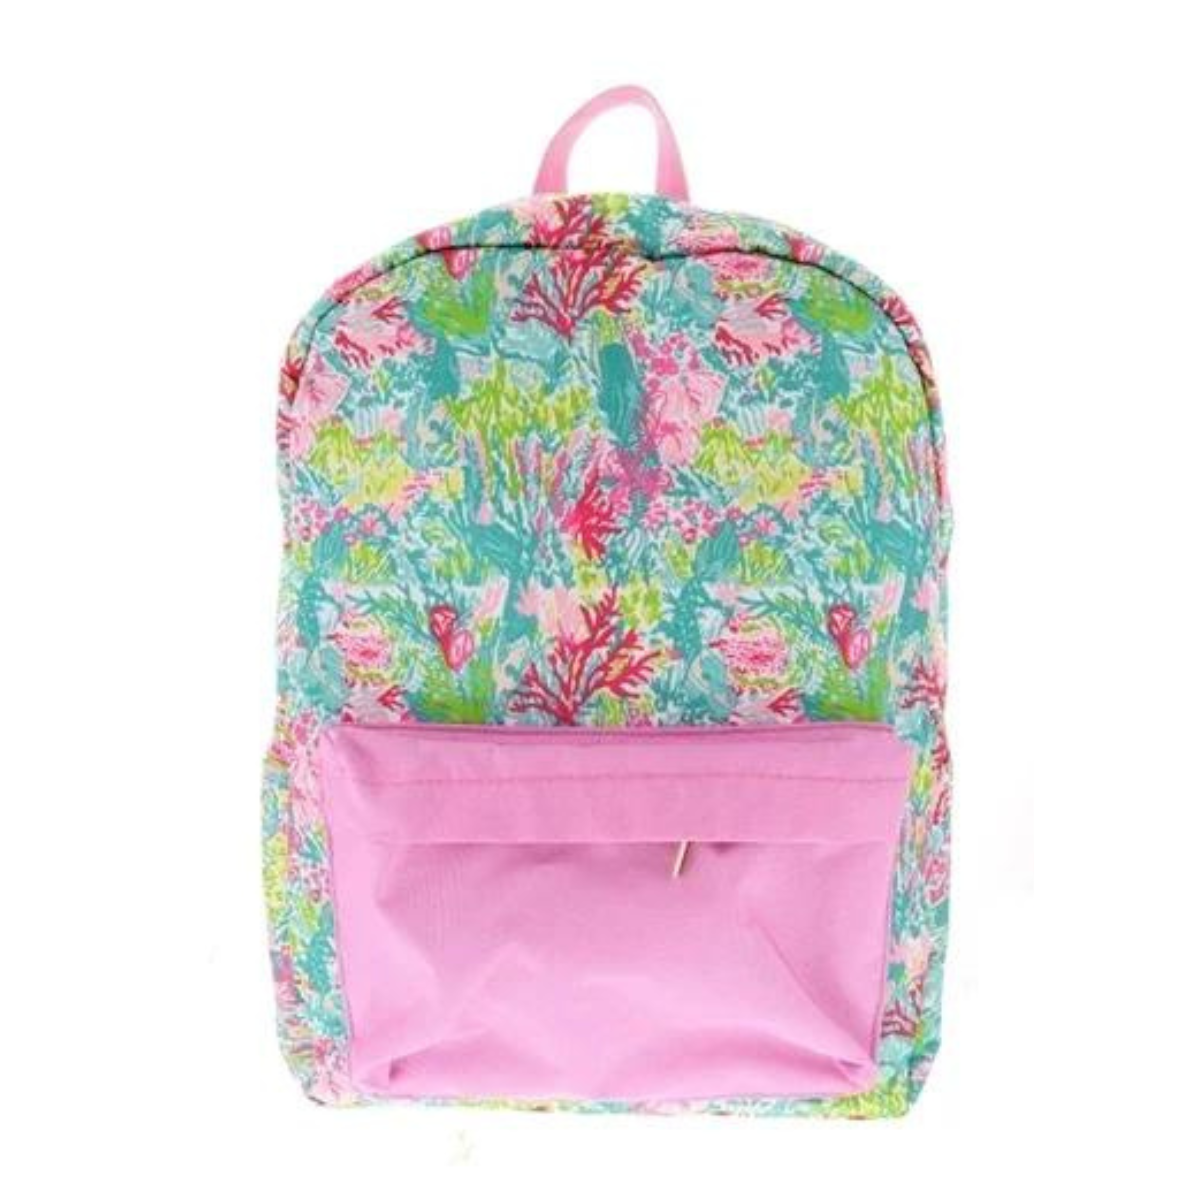 New Cute Love Girls' school backpack mochilas for Elementary